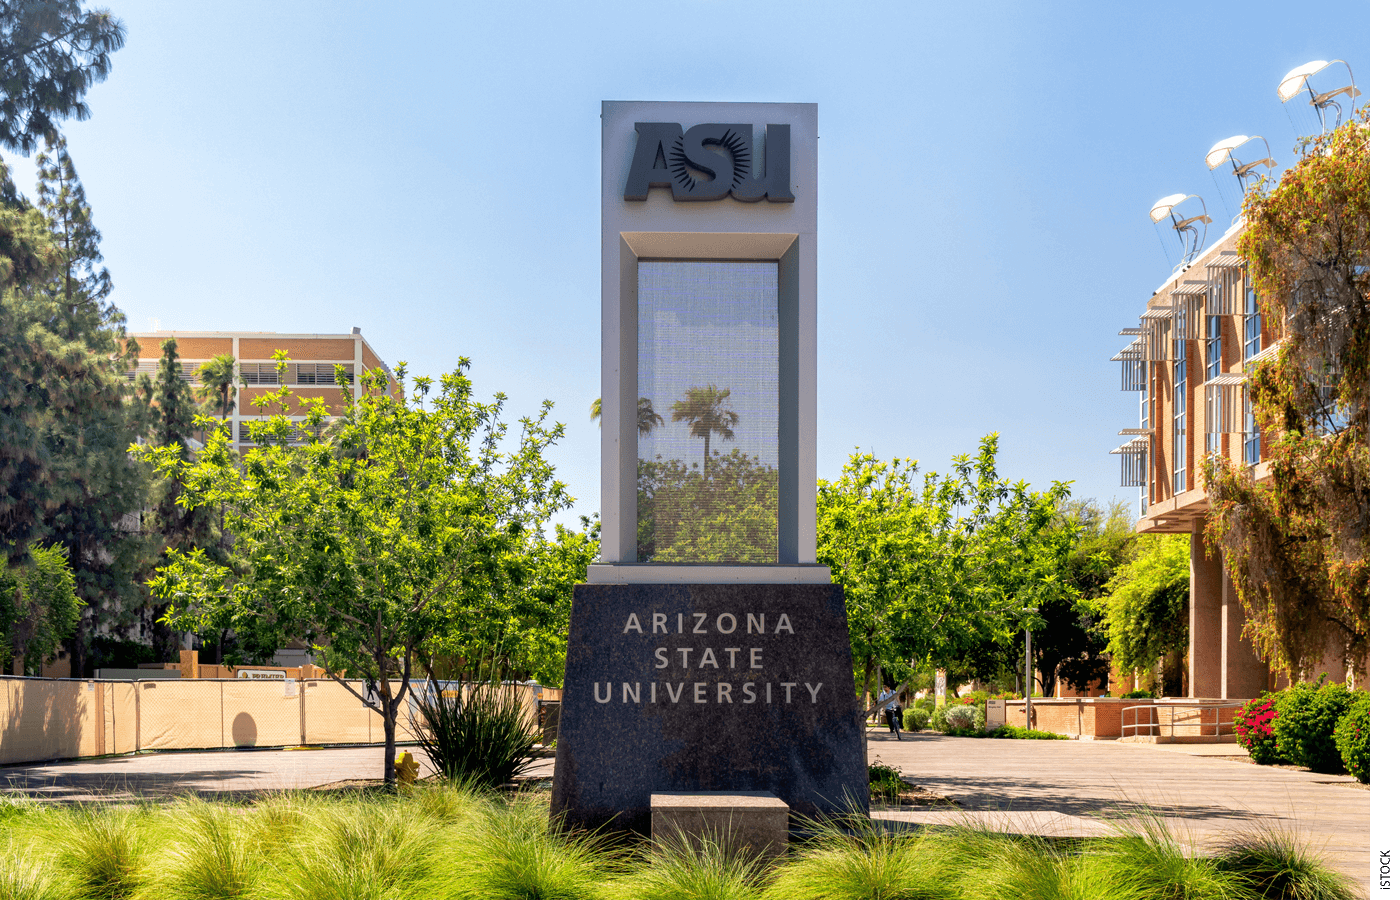 Exterior of Arizona State University